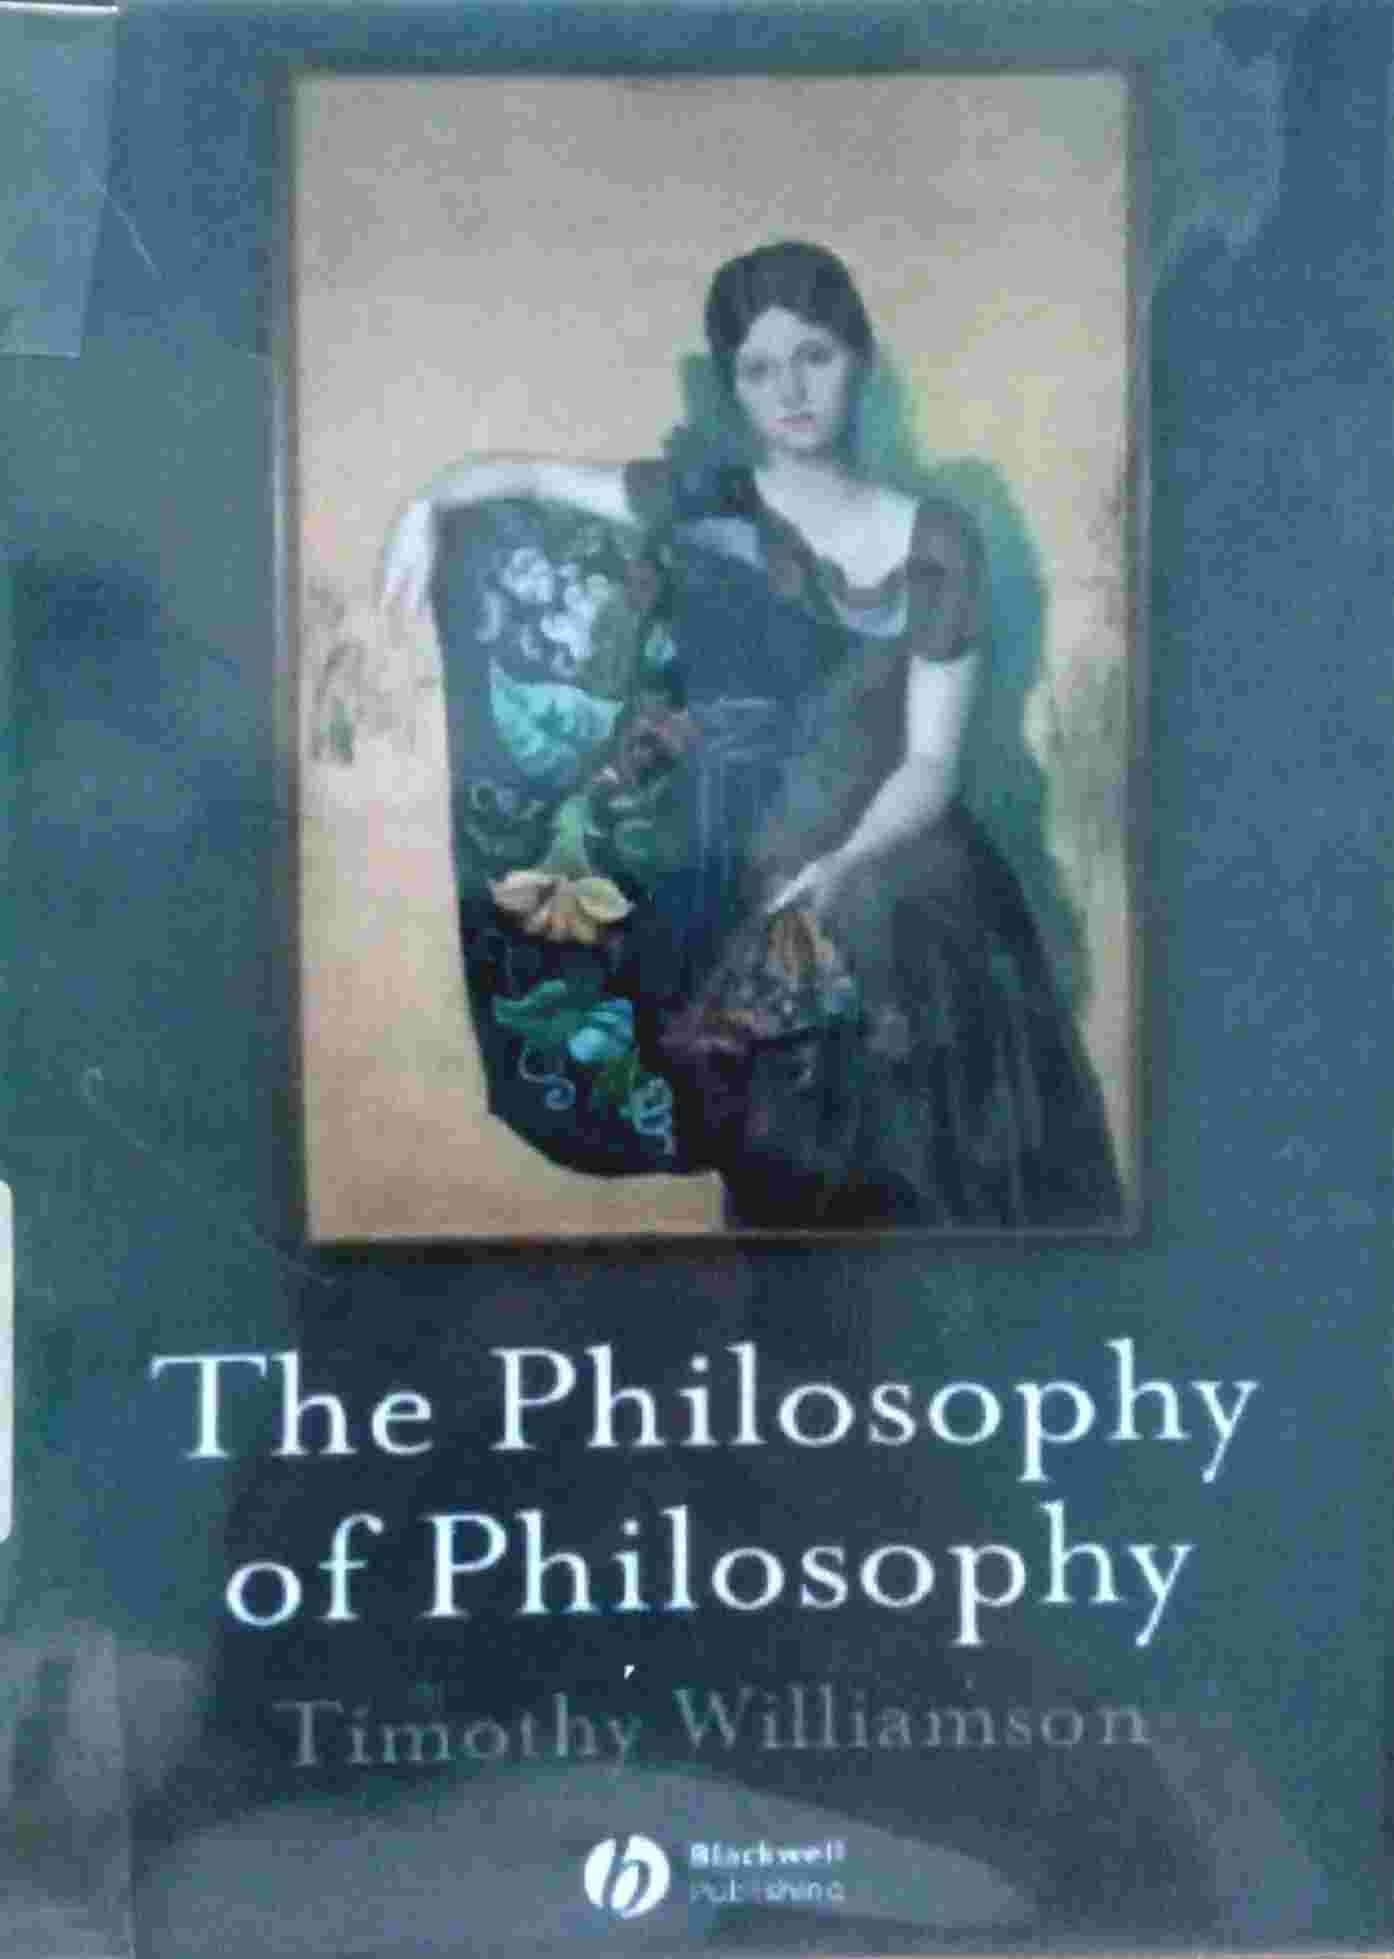 THE PHILOSOPHY OF PHILOSOPHY